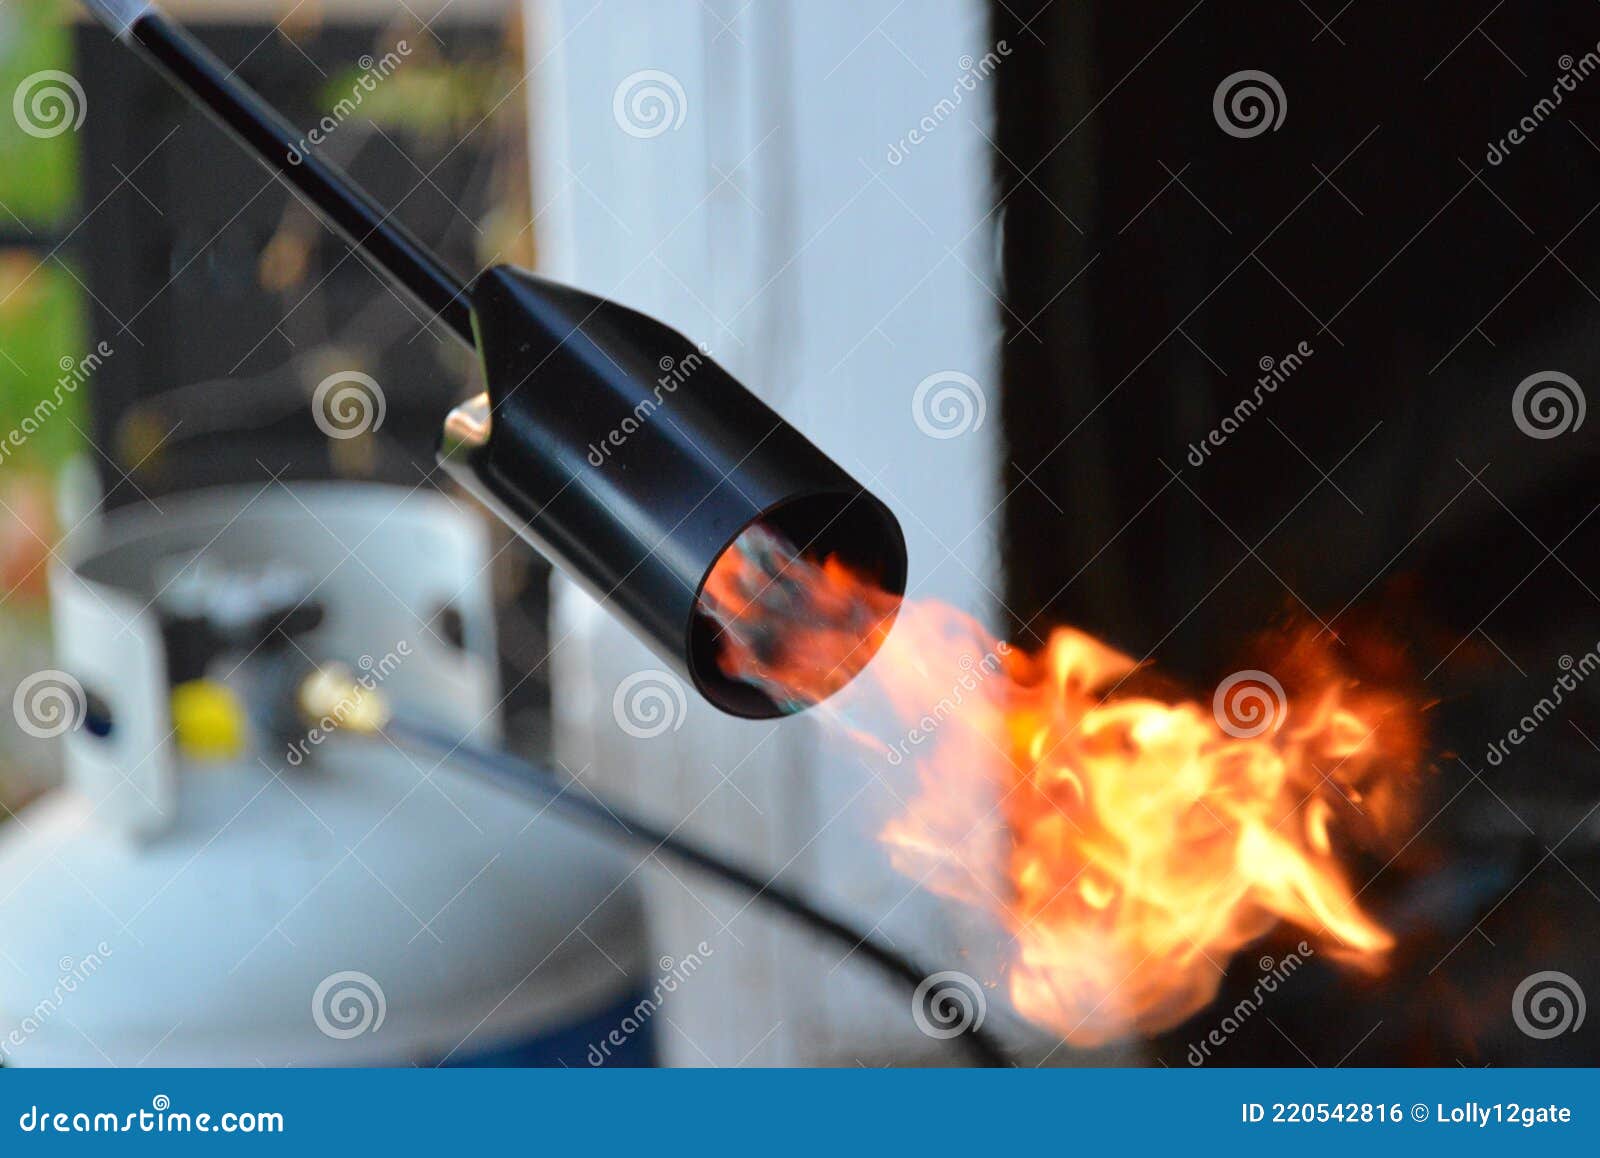 Propane Torch To Shou-sugi-ban Wood Burn a Project Stock Photo